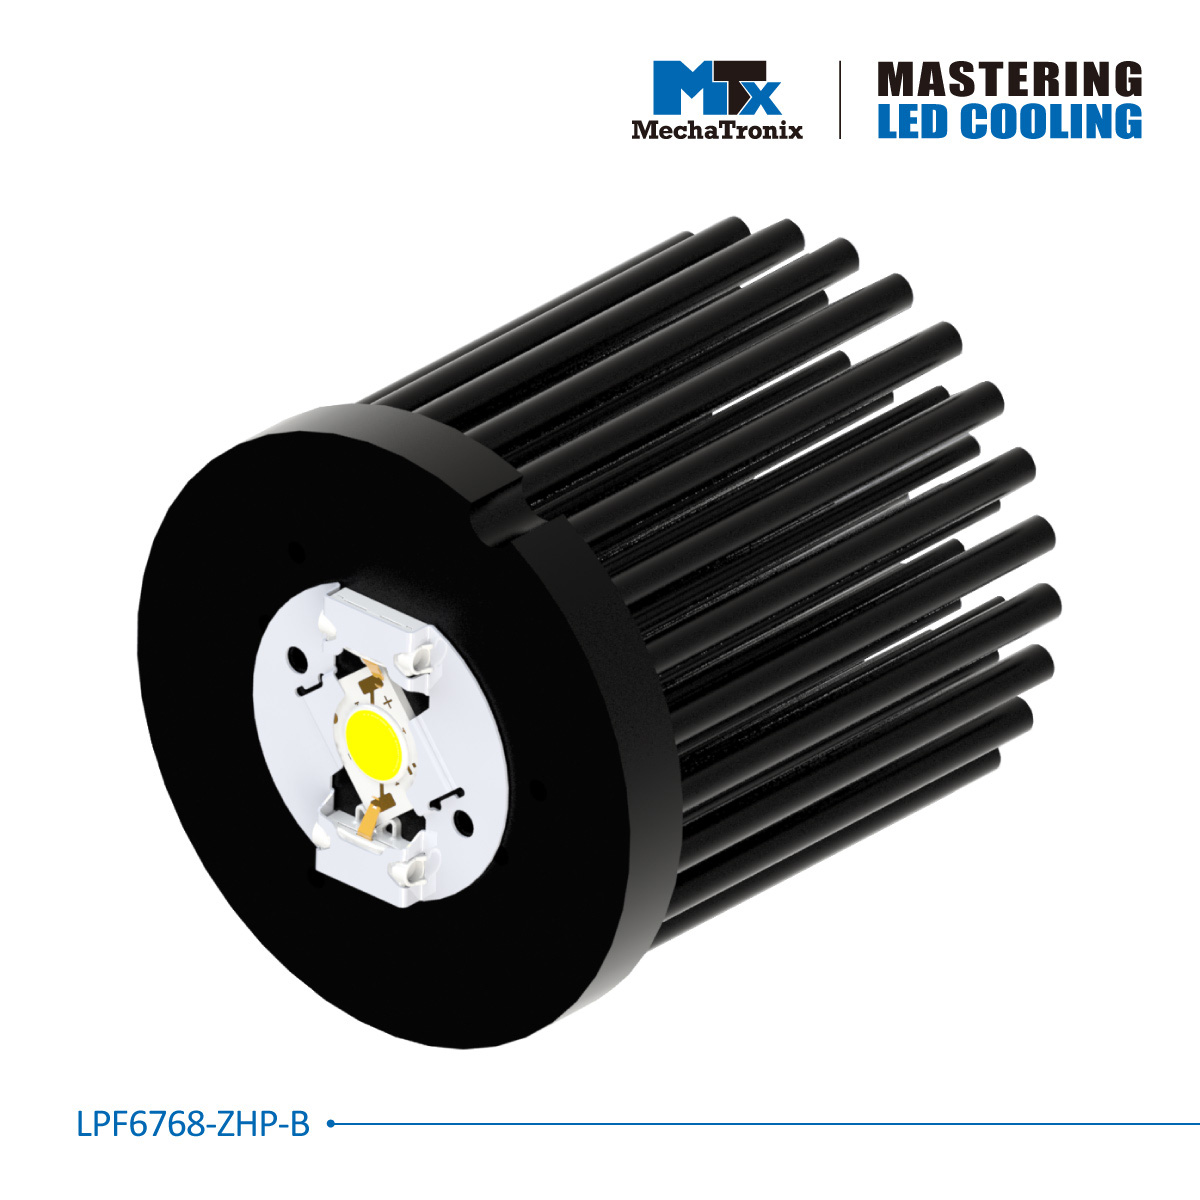 MechaTronix Heat Sink round 7cm LPF6768-ZHP-B for LED <4600lm